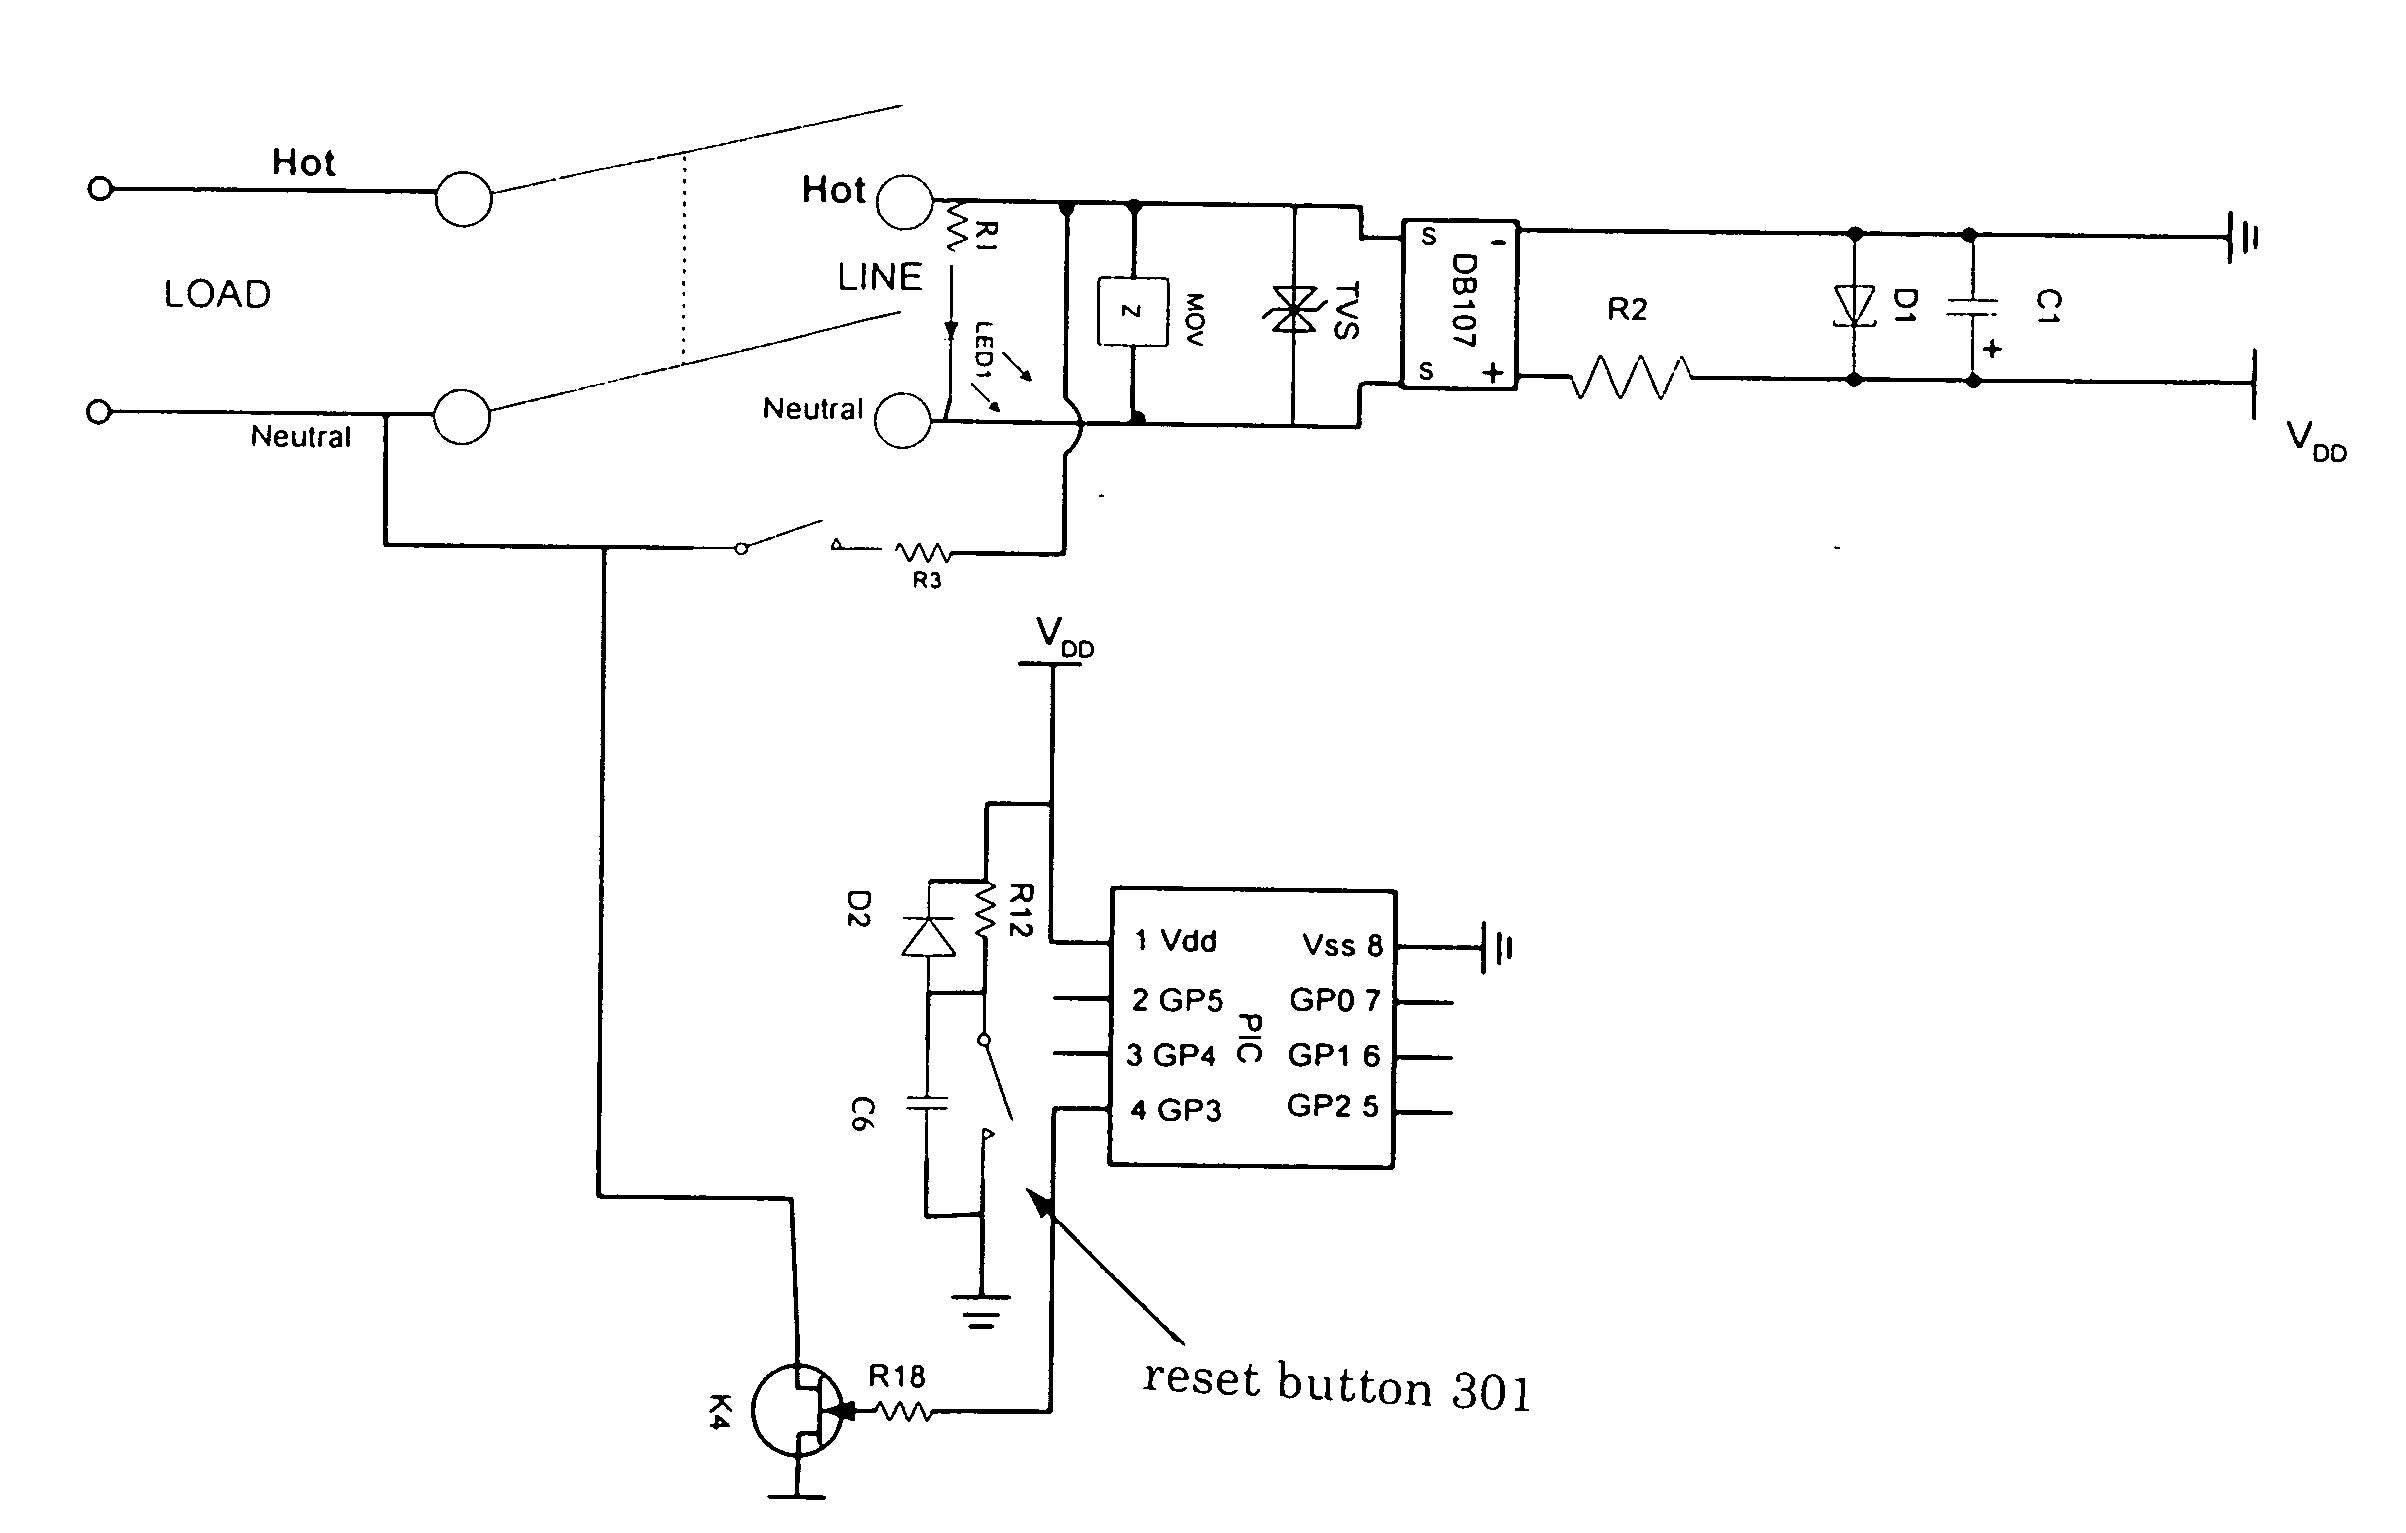 Ground fault circuit interrupter